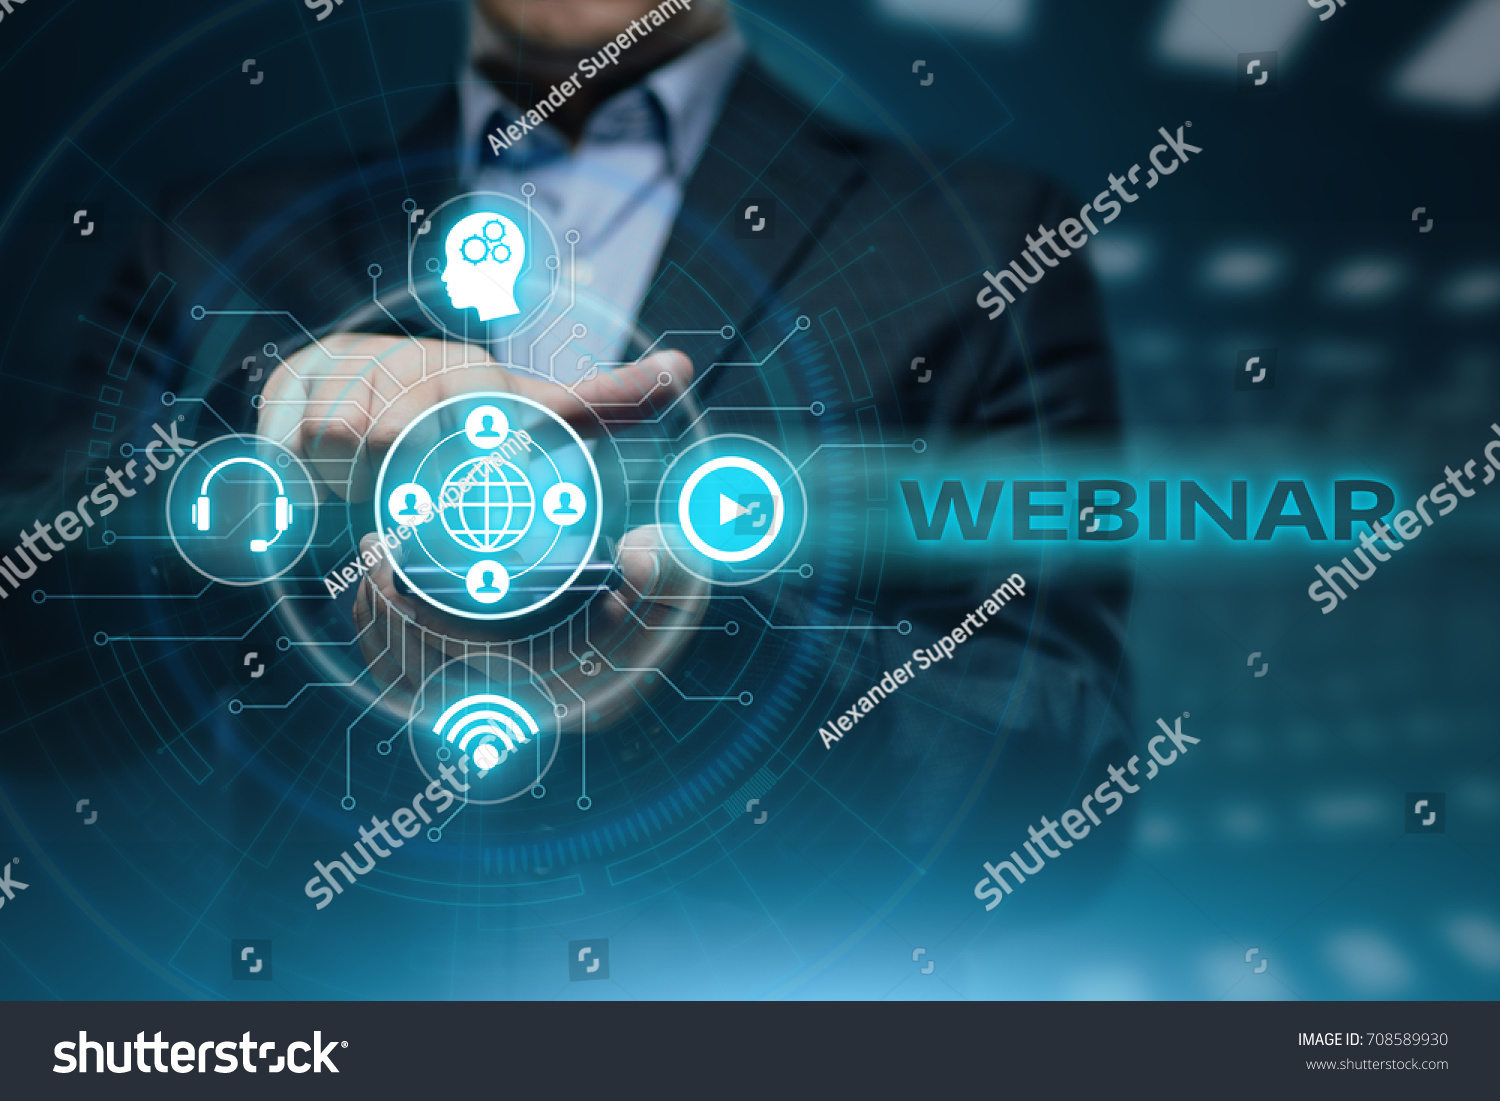 Webinar E-learning Training Business Internet Technology Concept. #708589930